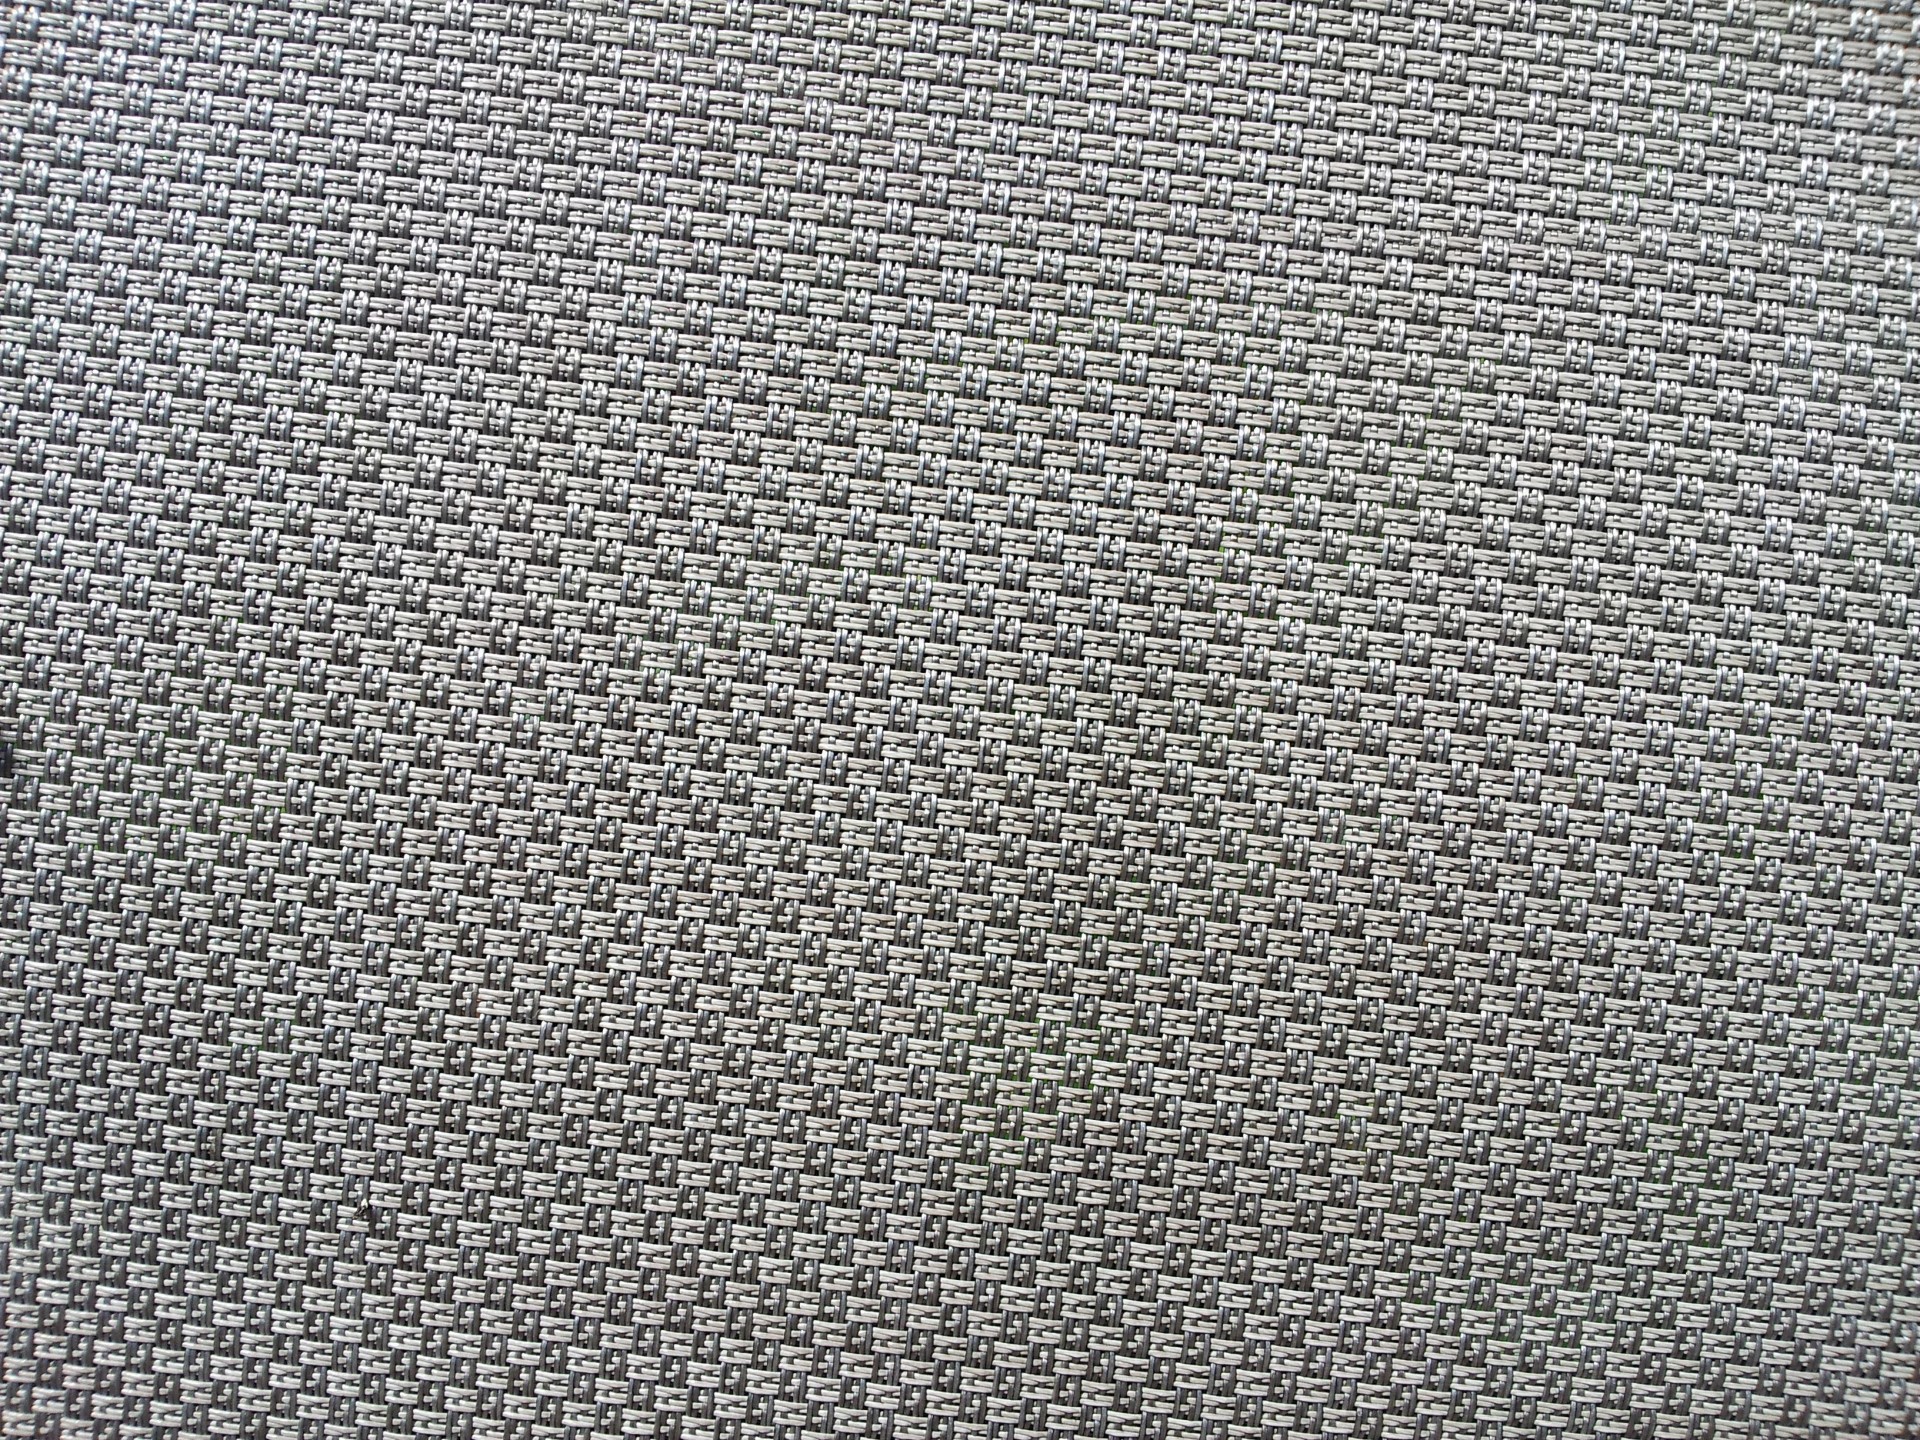 Stainless Steel Net Texture